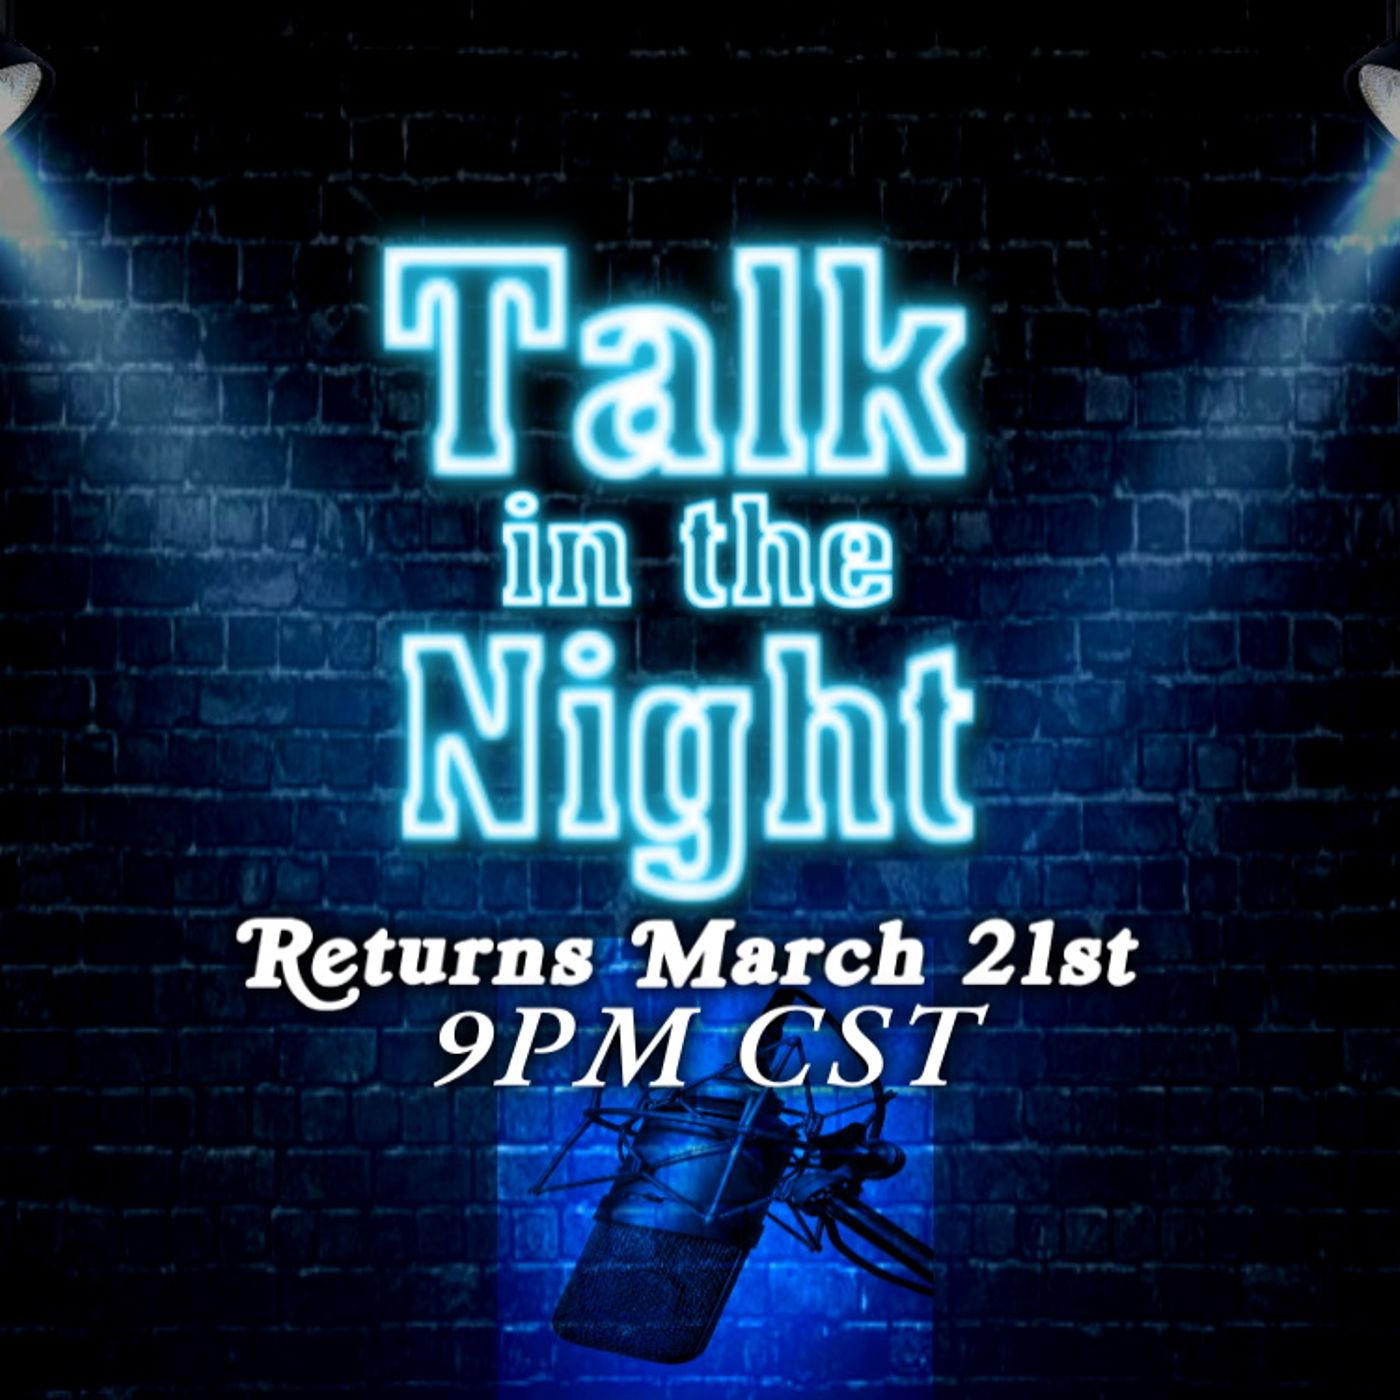 Talk in the Night Returns